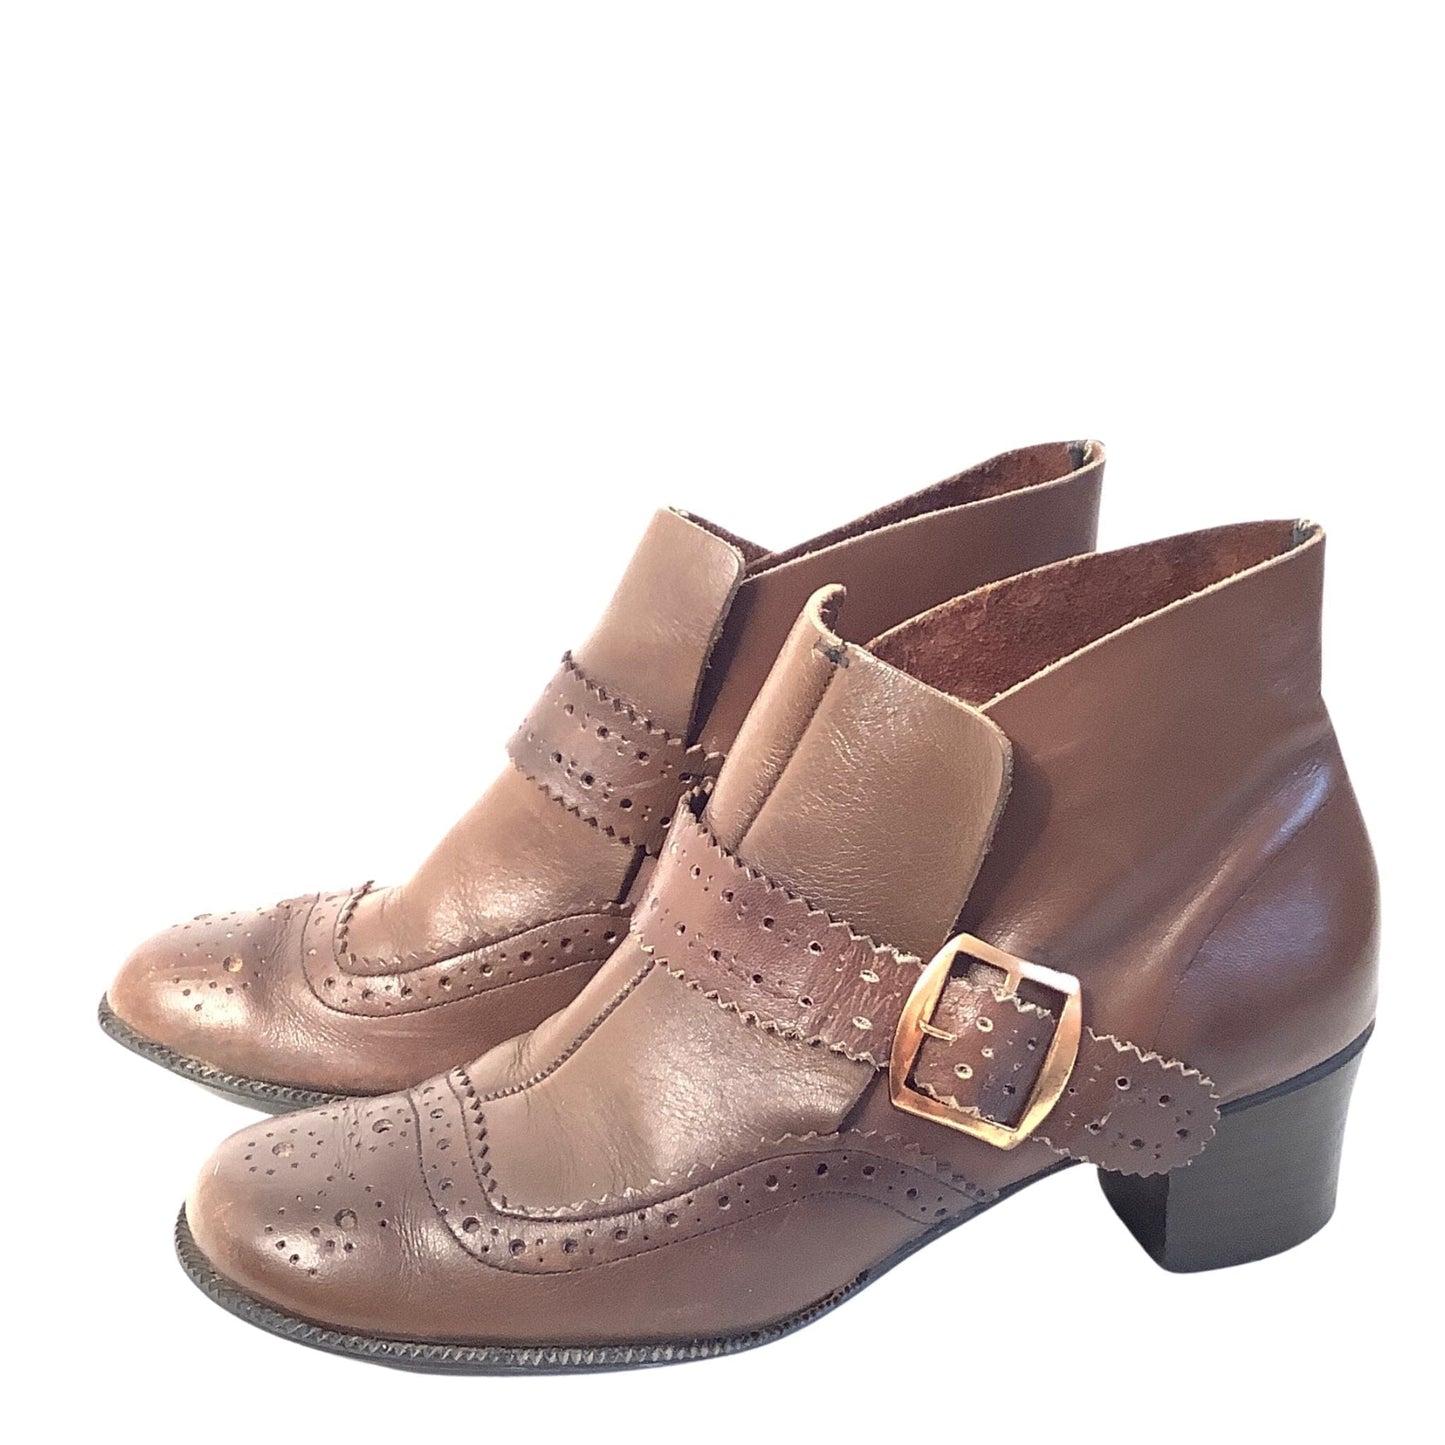 Sears Pilgrim Ankle Boots 6.5 / Brown / Vintage 1960s